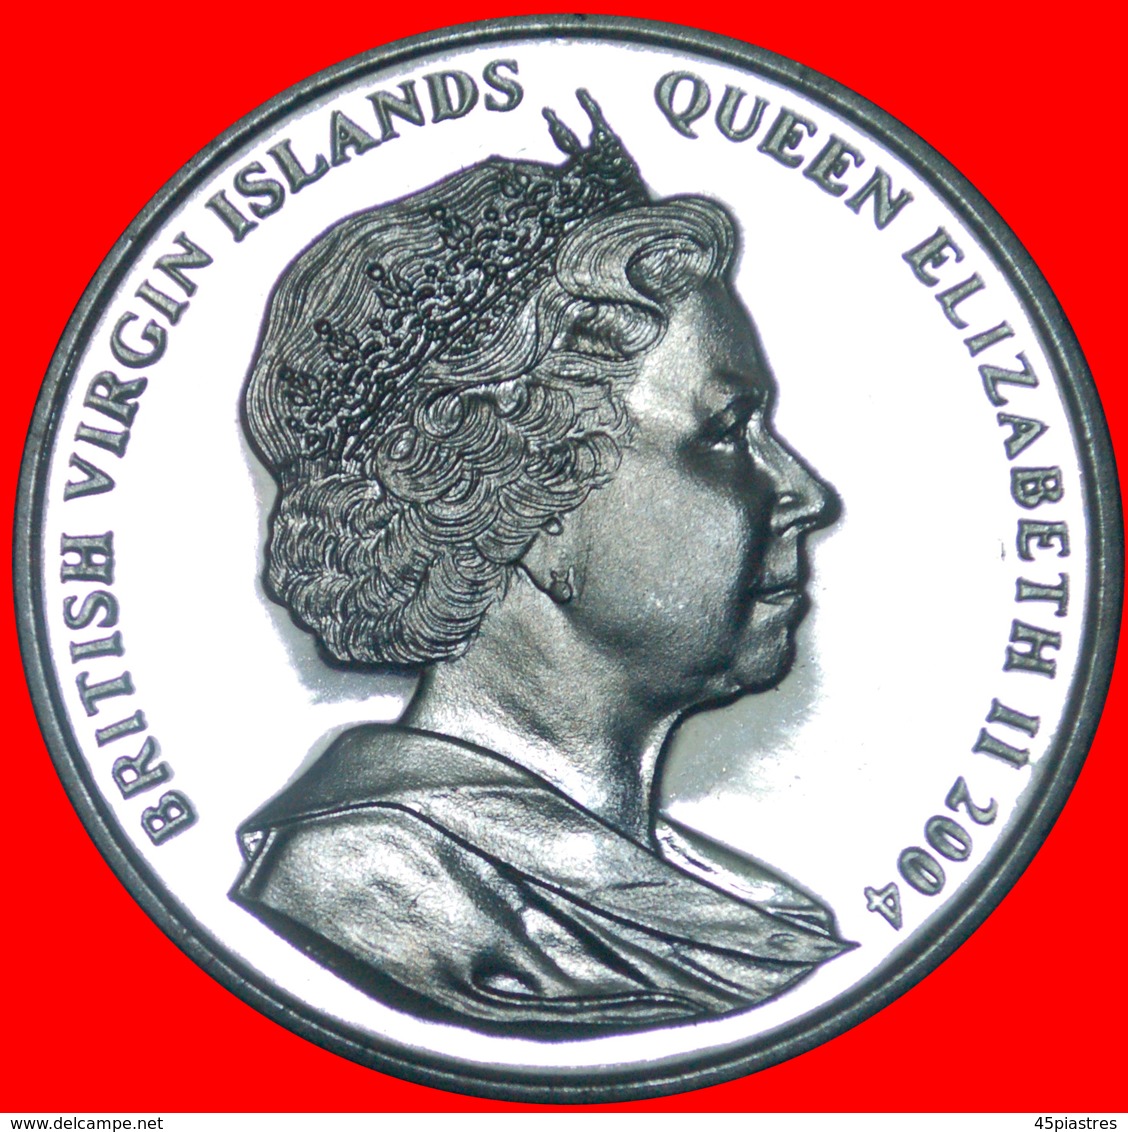 + GREAT BRITAIN: BRITISH VIRGIN ISLANDS ★ 1 DOLLAR 2004PM SHIPS! LOW START ★ NO RESERVE! - British Virgin Islands